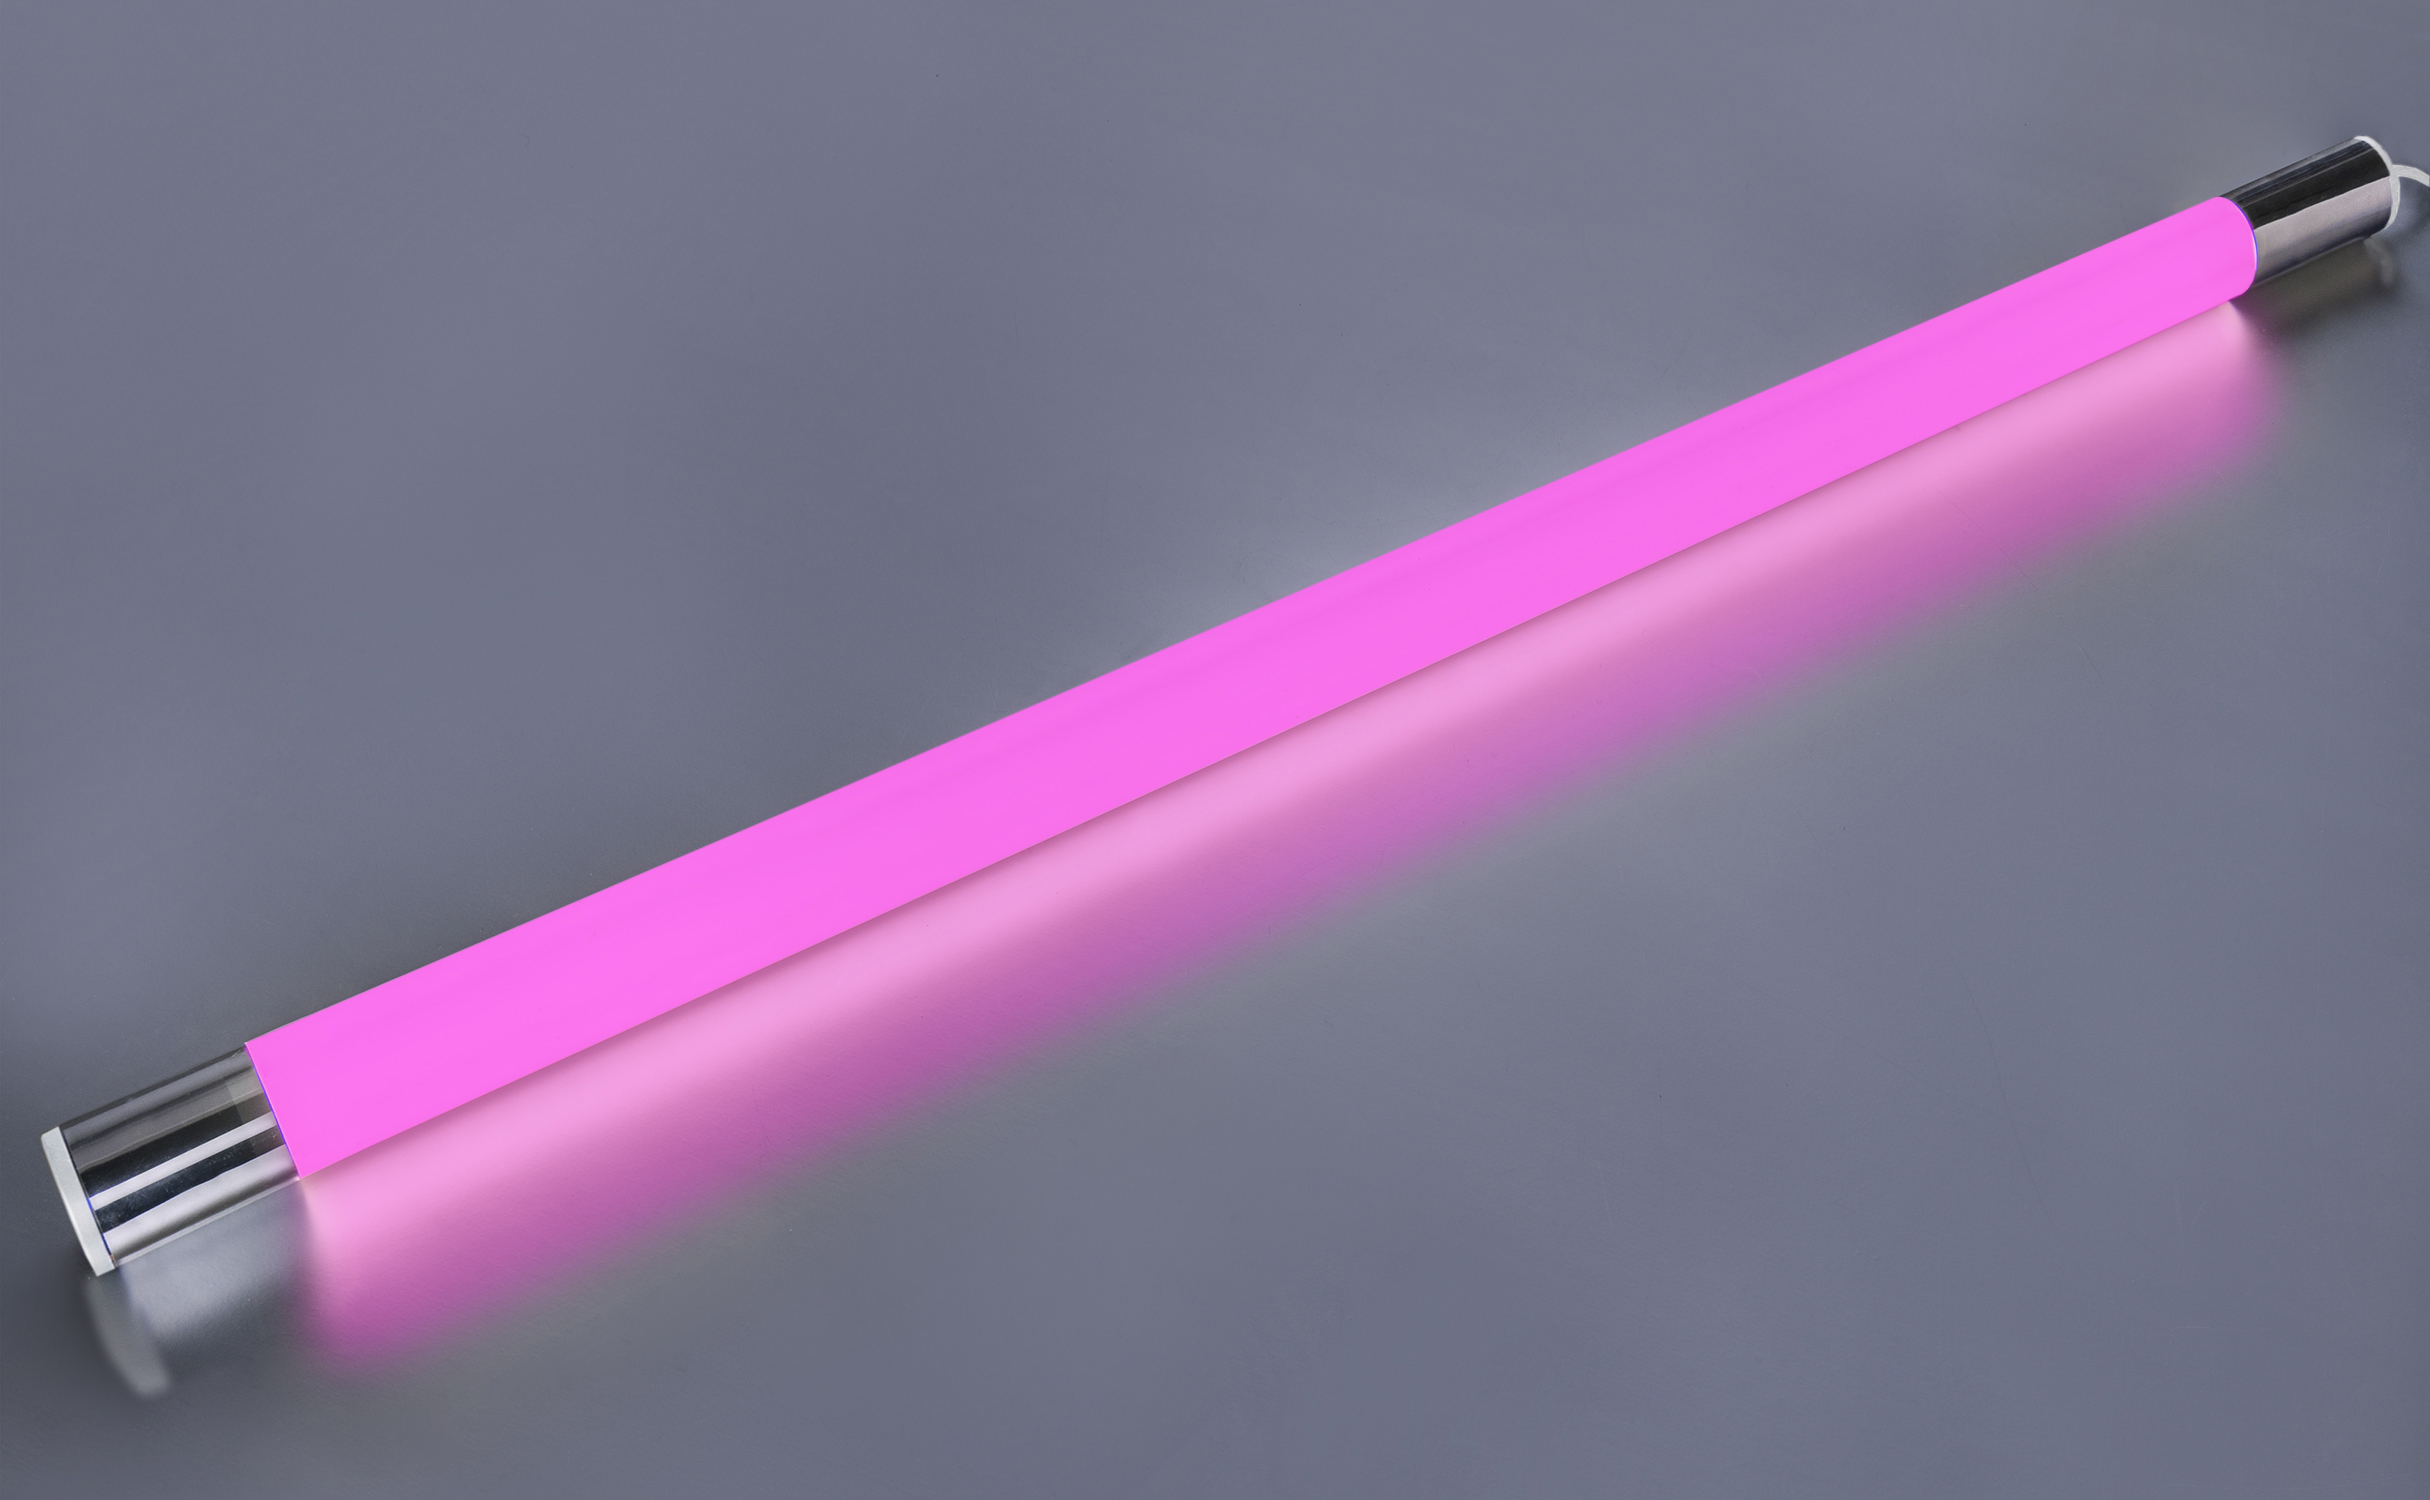 https://www.lichted.de/out/pictures/master/product/1/led-leuchtstab-frozen-diffus-pink-10-watt-63cm-schnur-schalter-ip20-005014.jpg